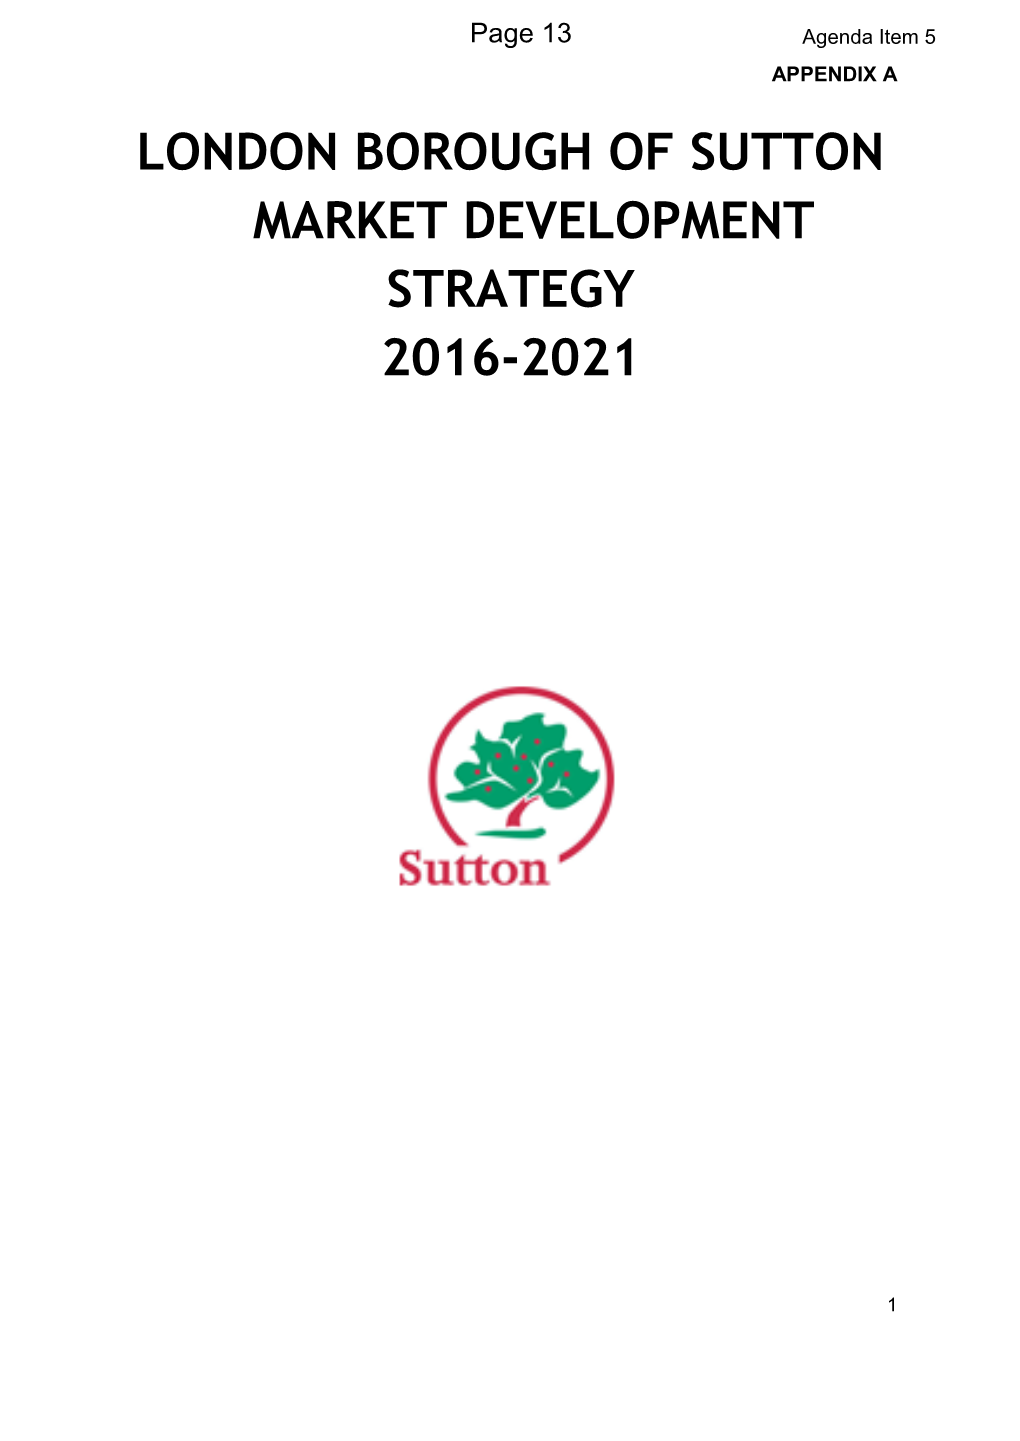 London Borough of Sutton Market Development Strategy 2016-2021